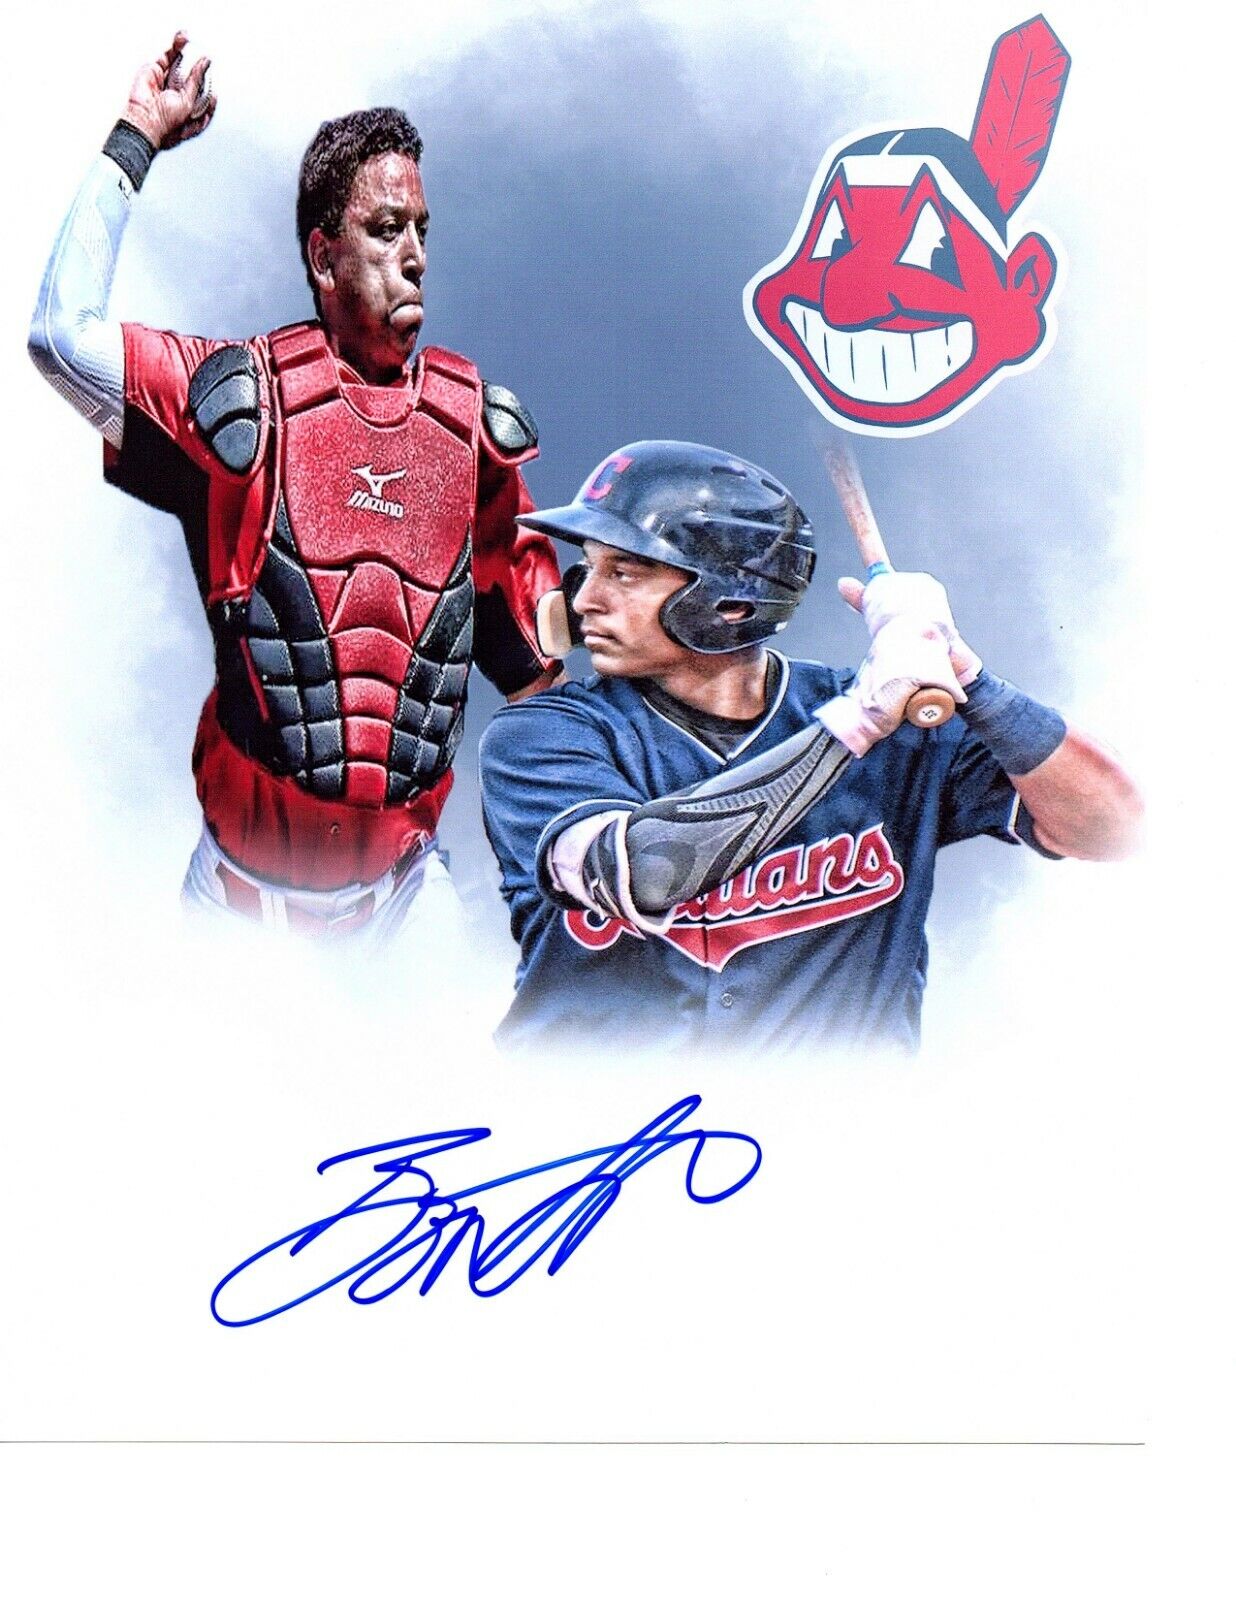 Bo Naylor signed 8x10 Photo Poster painting autograph Cleveland Indians Prospect baseball Noah!